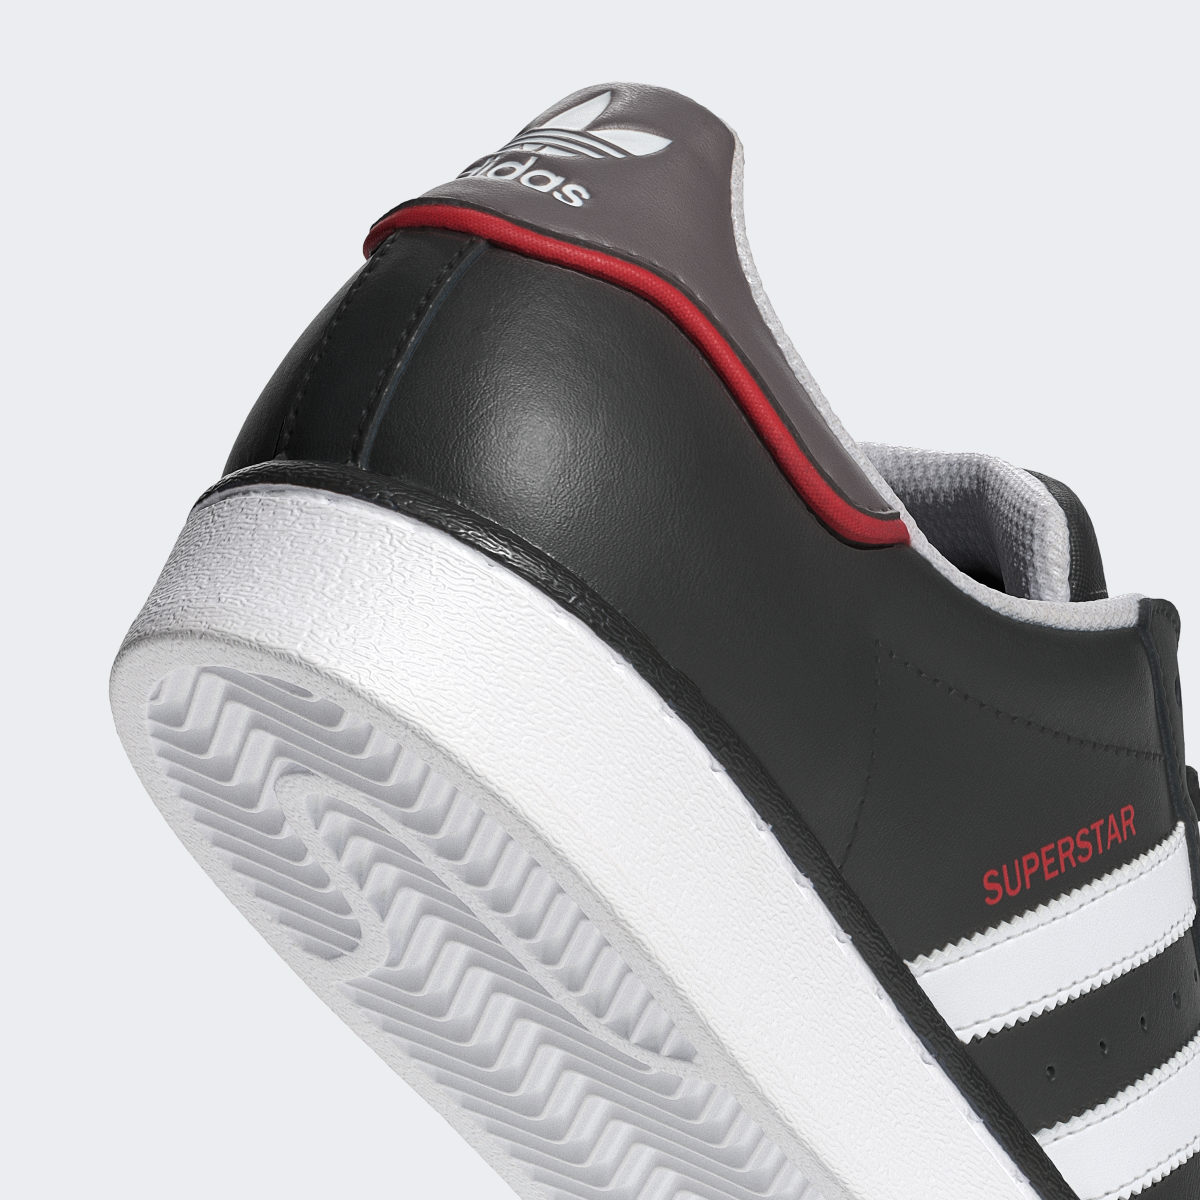 Adidas Superstar Shoes. 9